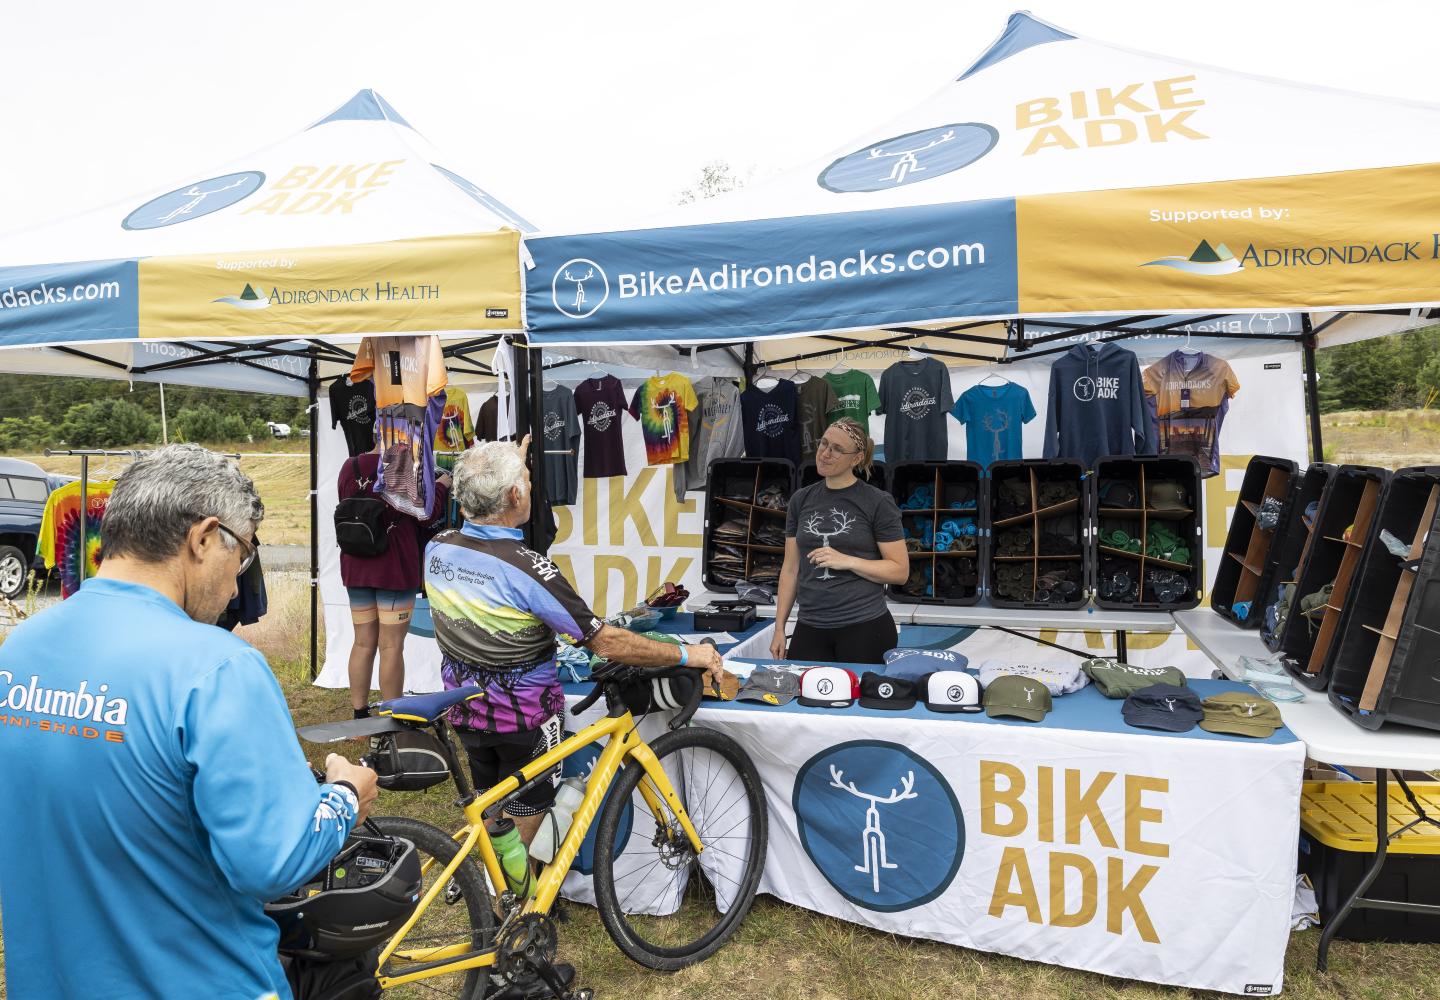 Shop Bike Adirondacks Online Store